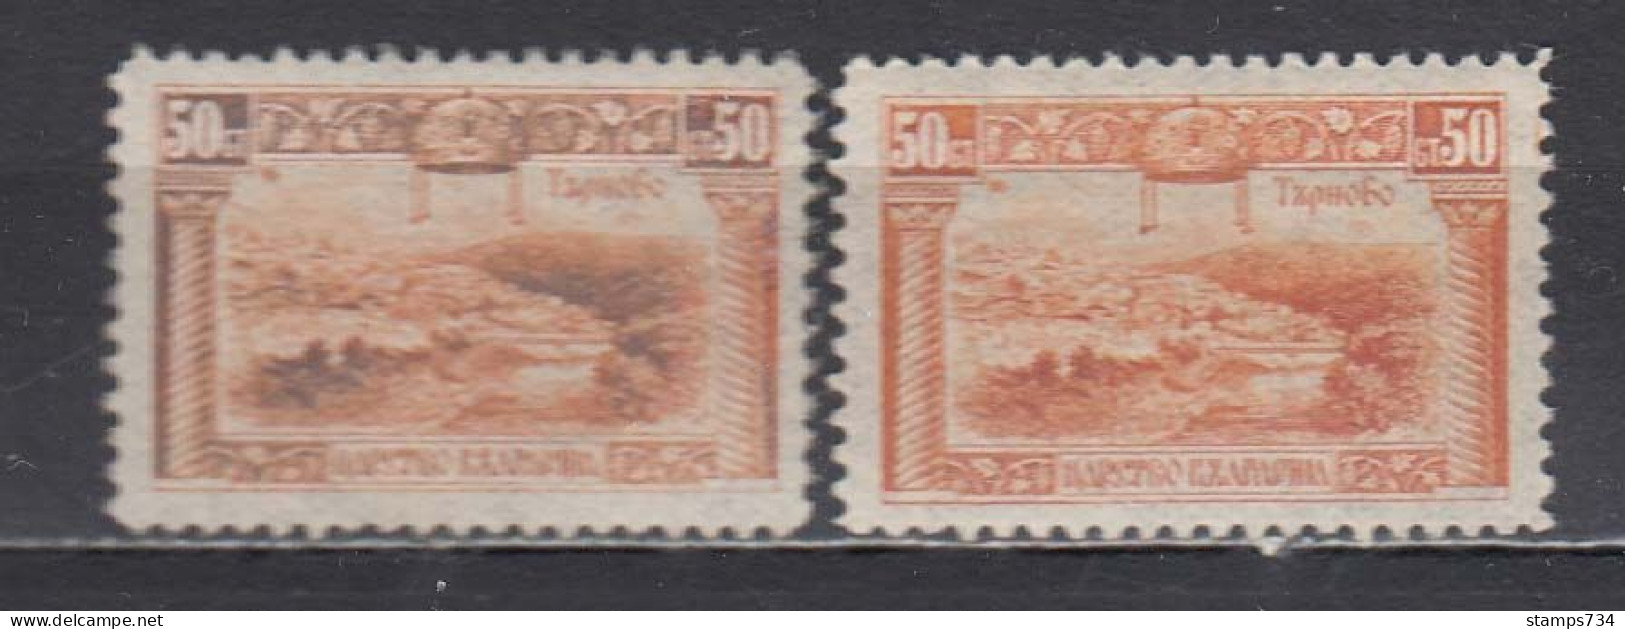 Bulgaria 1921 - Regular Stamps, 50 St,, Two Colors, Mi-Nr. 159, MNH** - Variétés Et Curiosités